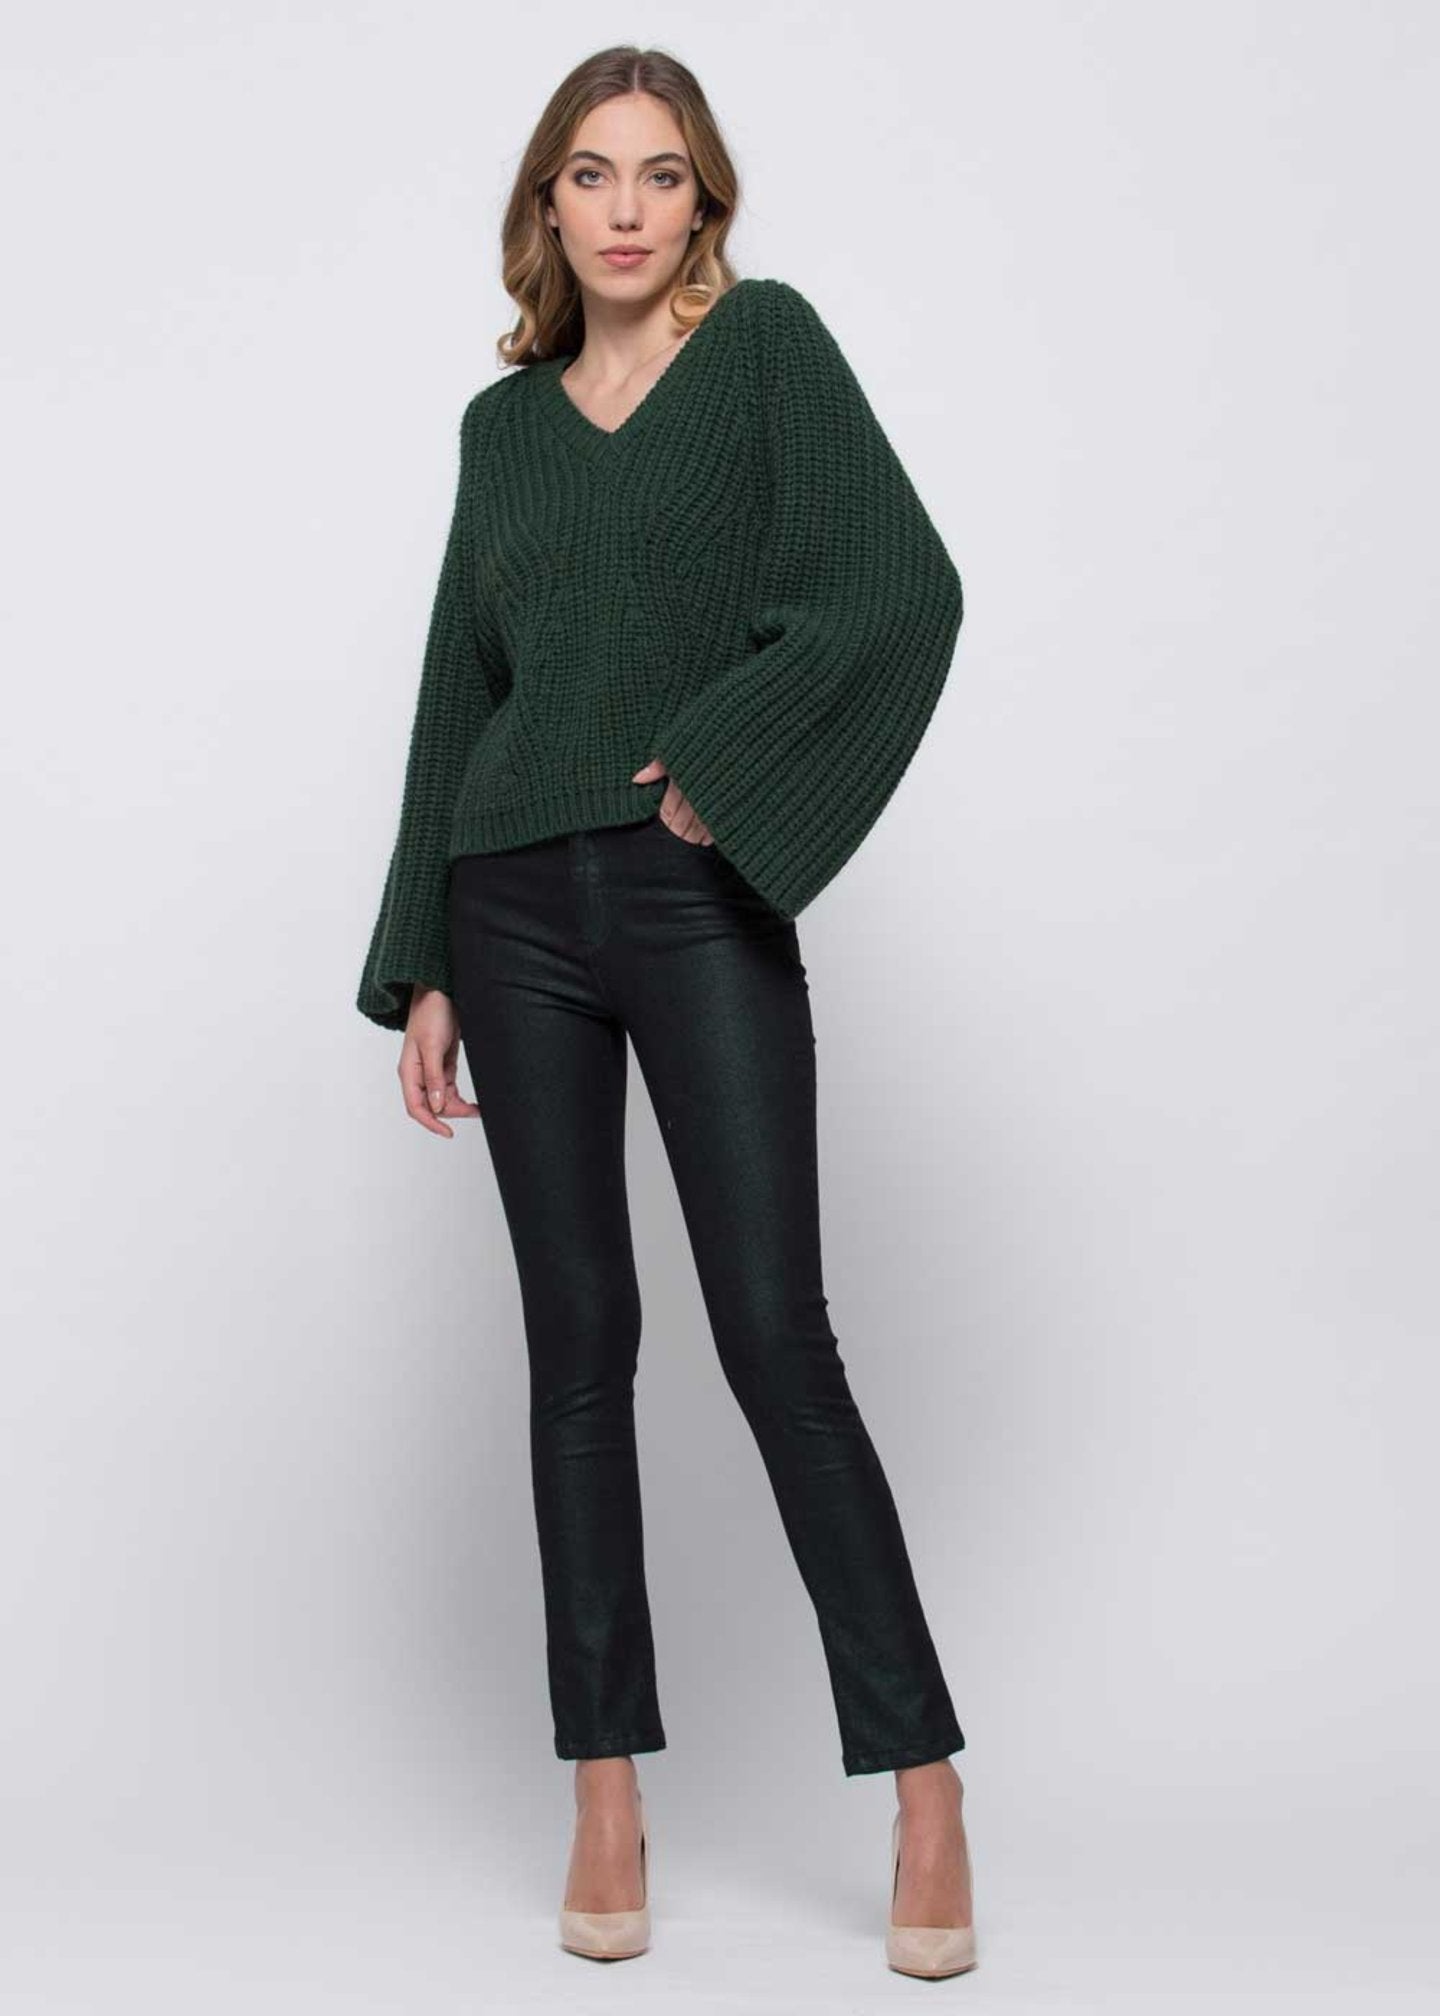 Pantalone Kocca Modello Skinny / Green - Ideal Moda